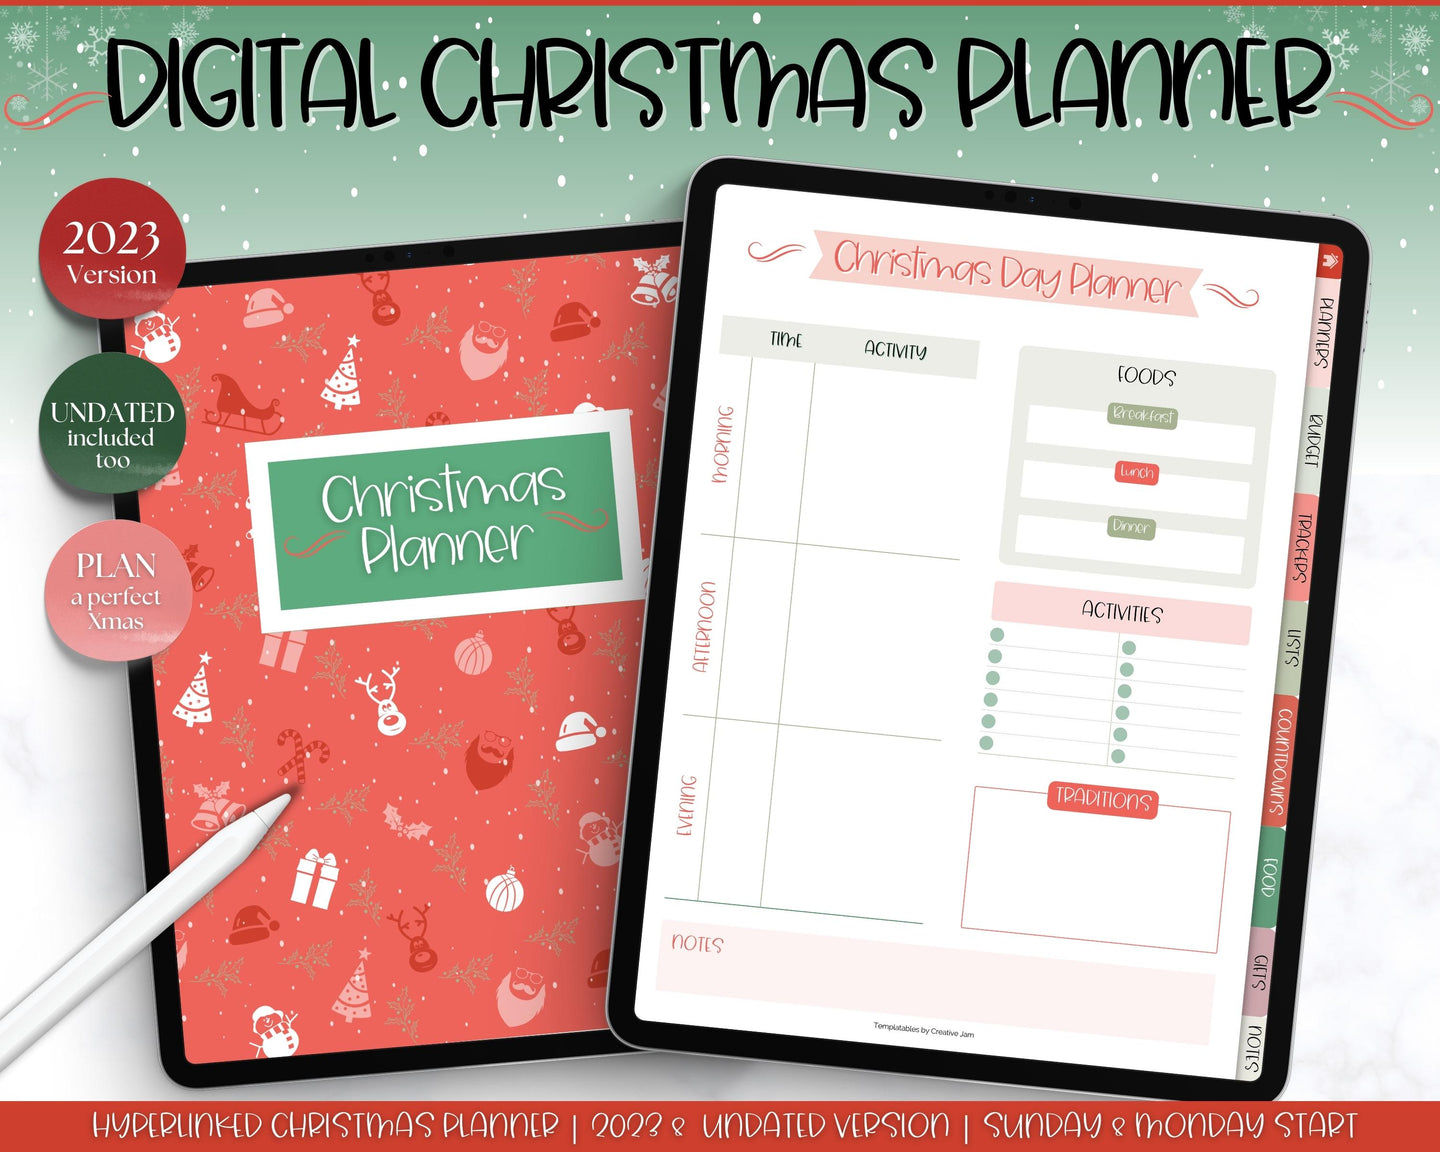 2023 Digital Christmas Planner | Xmas Holiday Checklist, Shopping List, To Do List for GoodNotes & iPad